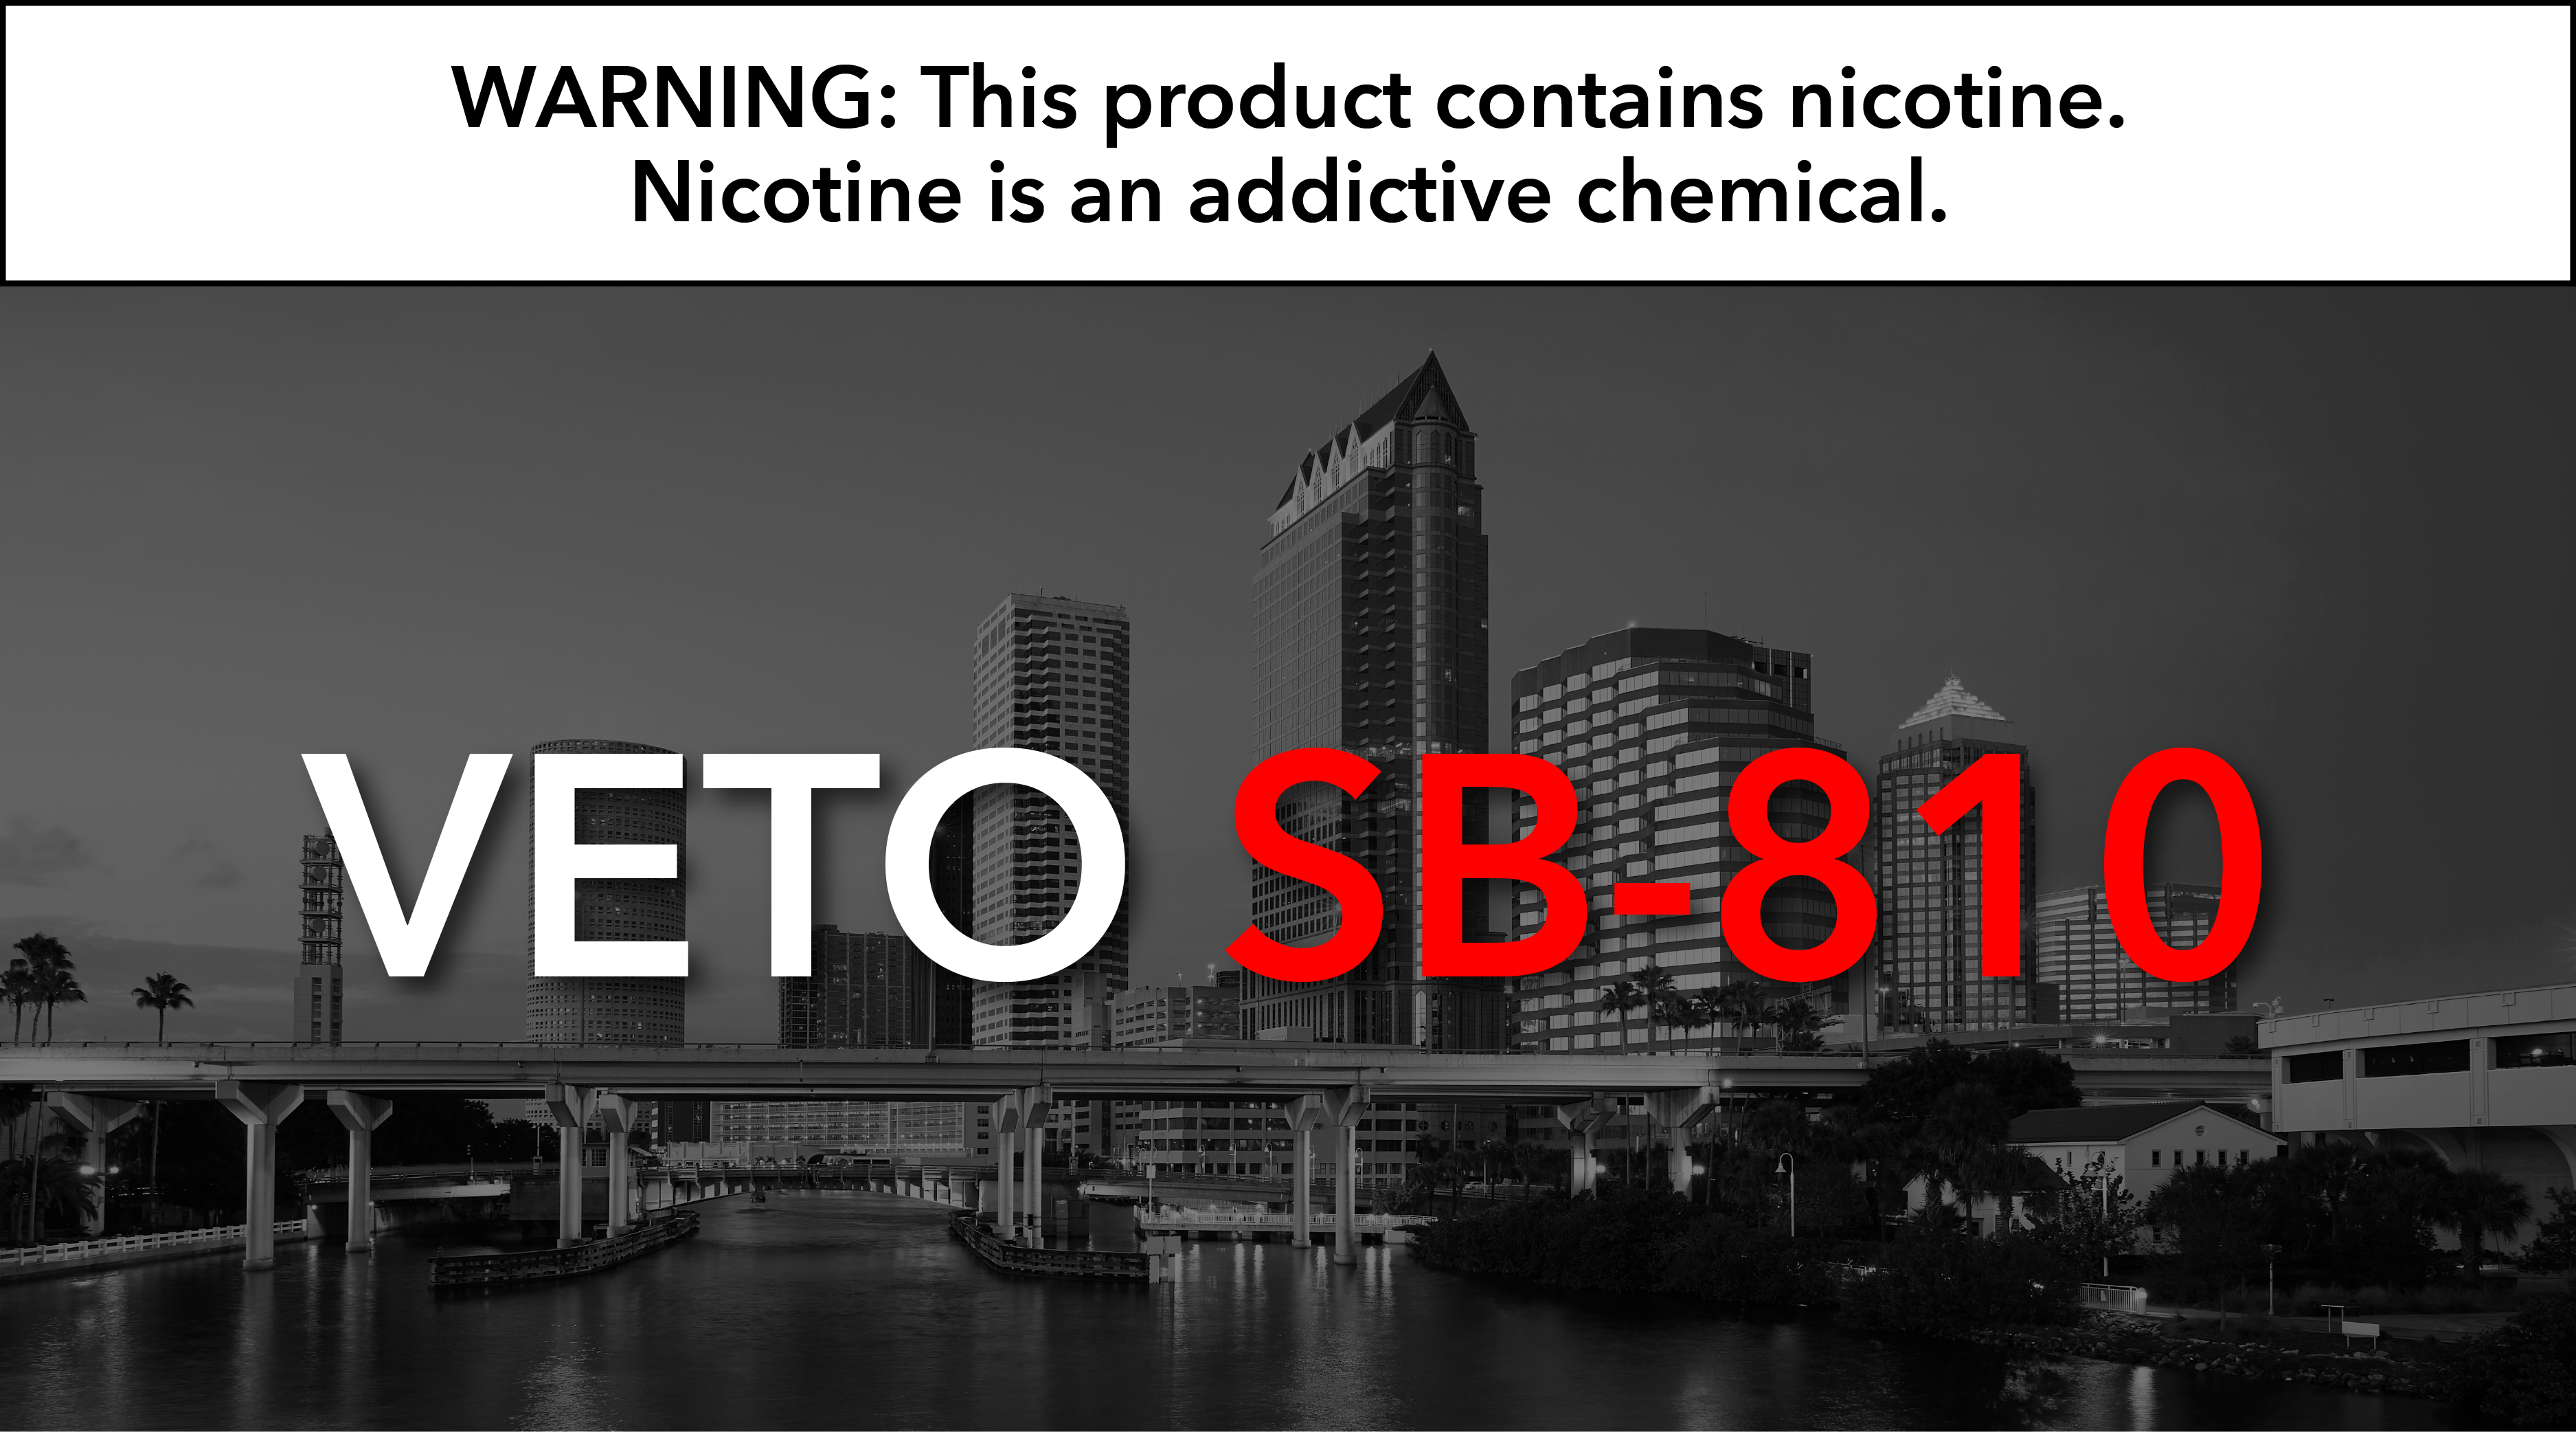 CALL TO ACTION: Urge Florida Governor DeSantis to VETO SB810